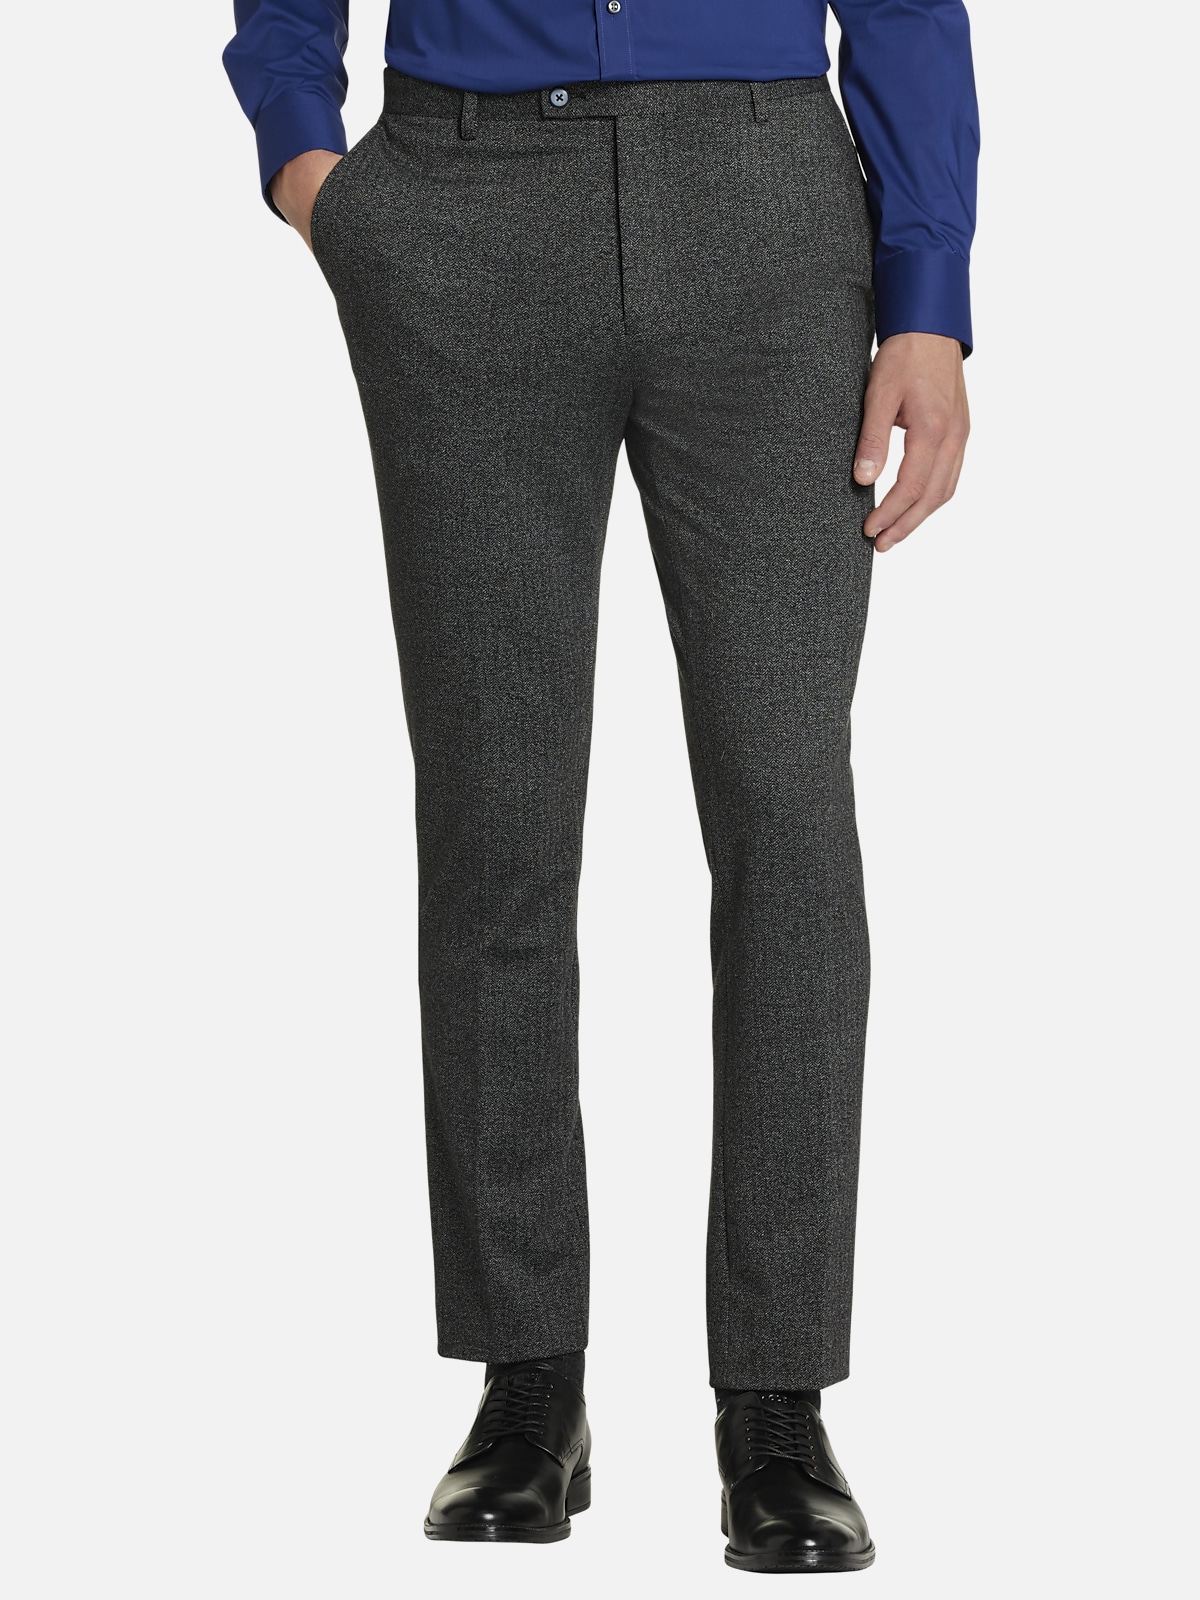 Paisley & Gray Slim Fit Herringbone Suit Separates Pants | Clearance ...